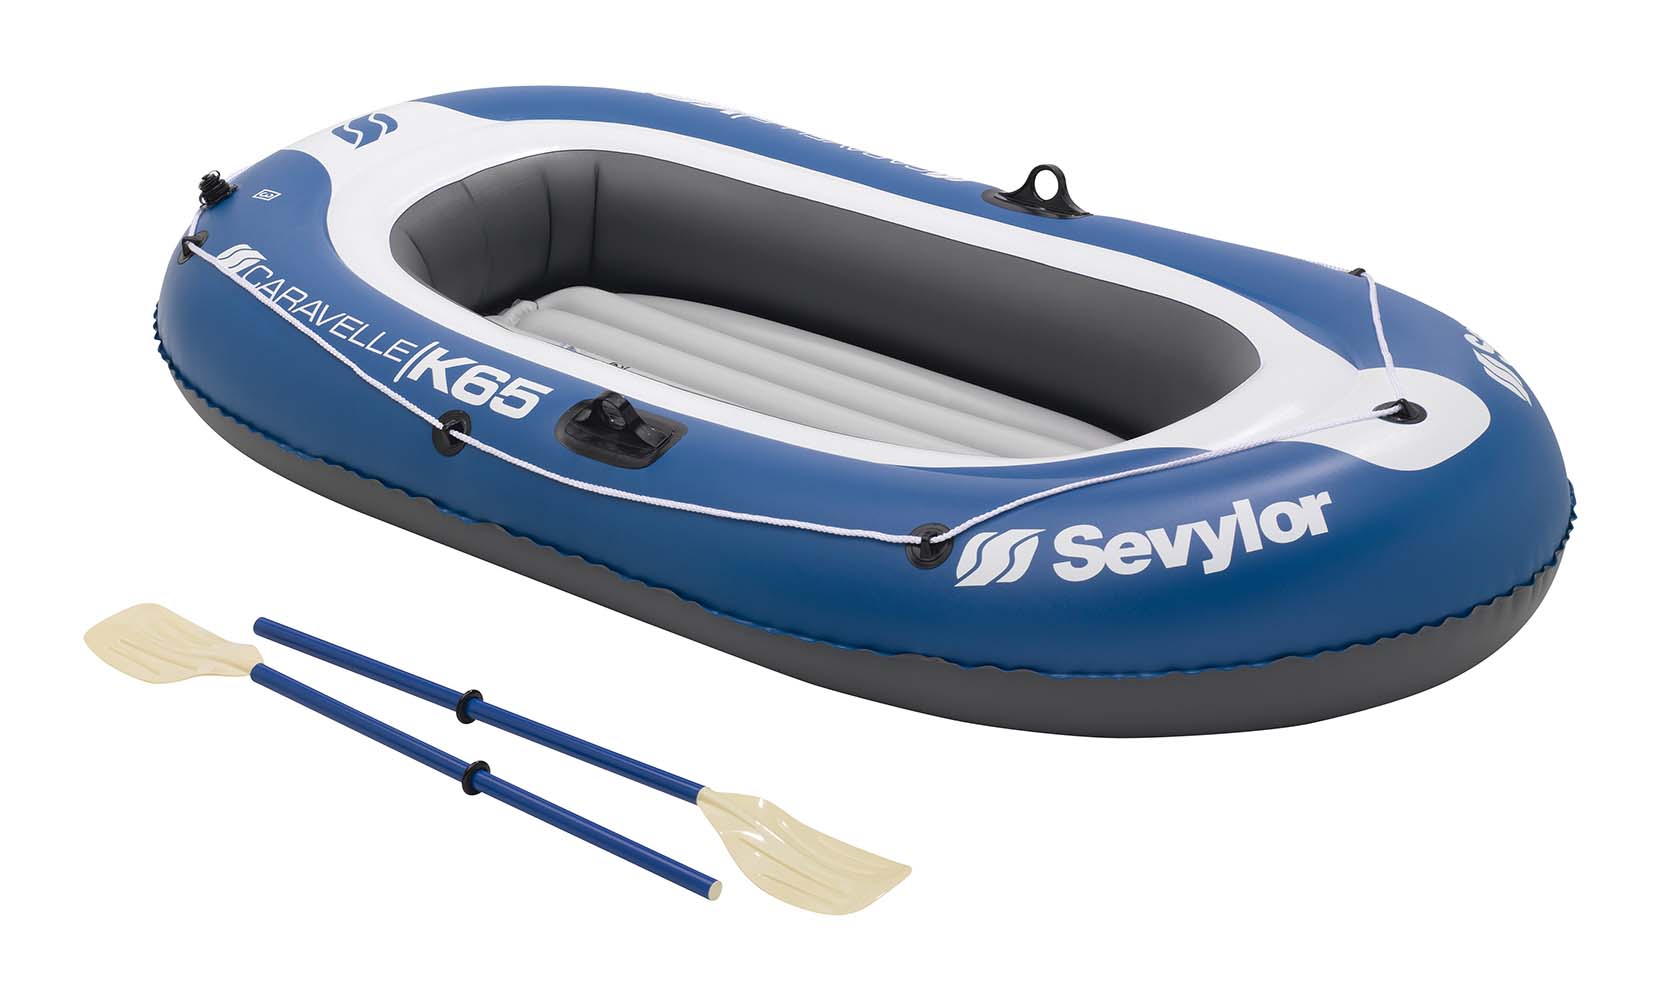 Sevylor - Boat Caravelle KK65 kit 2-person